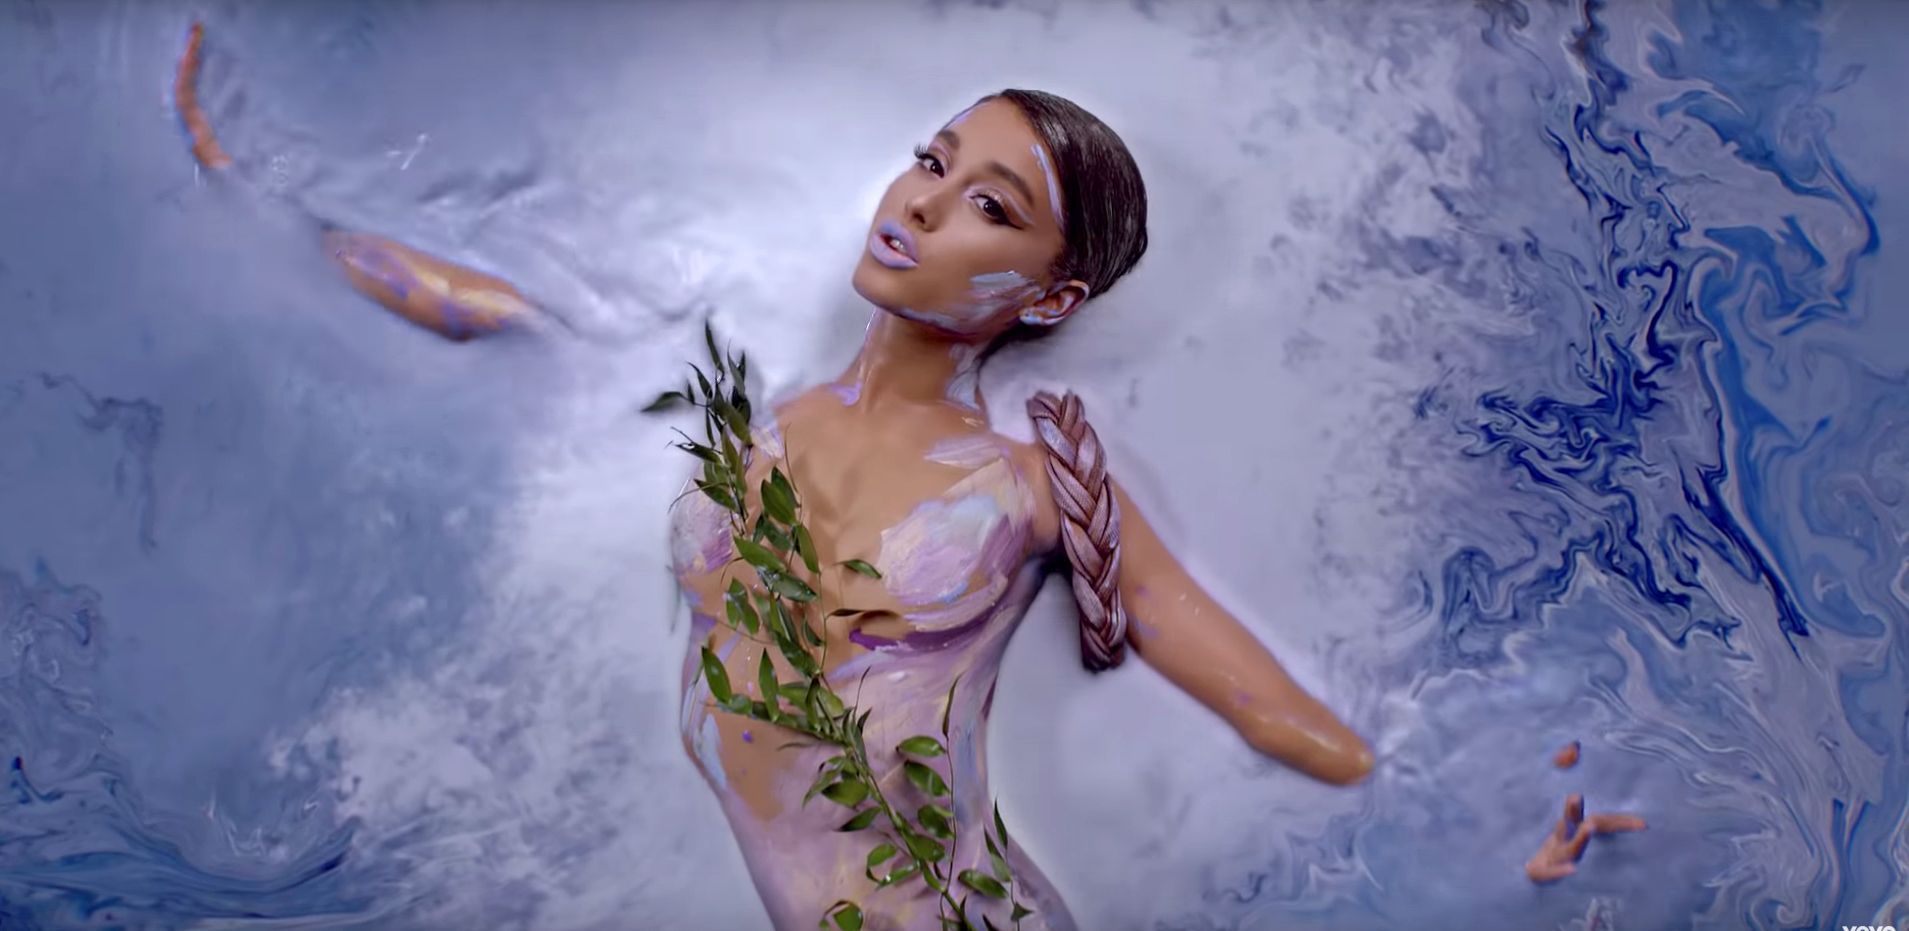 Ariana Grande's 'God Is a Woman' Video: 6 Bizarre Moments